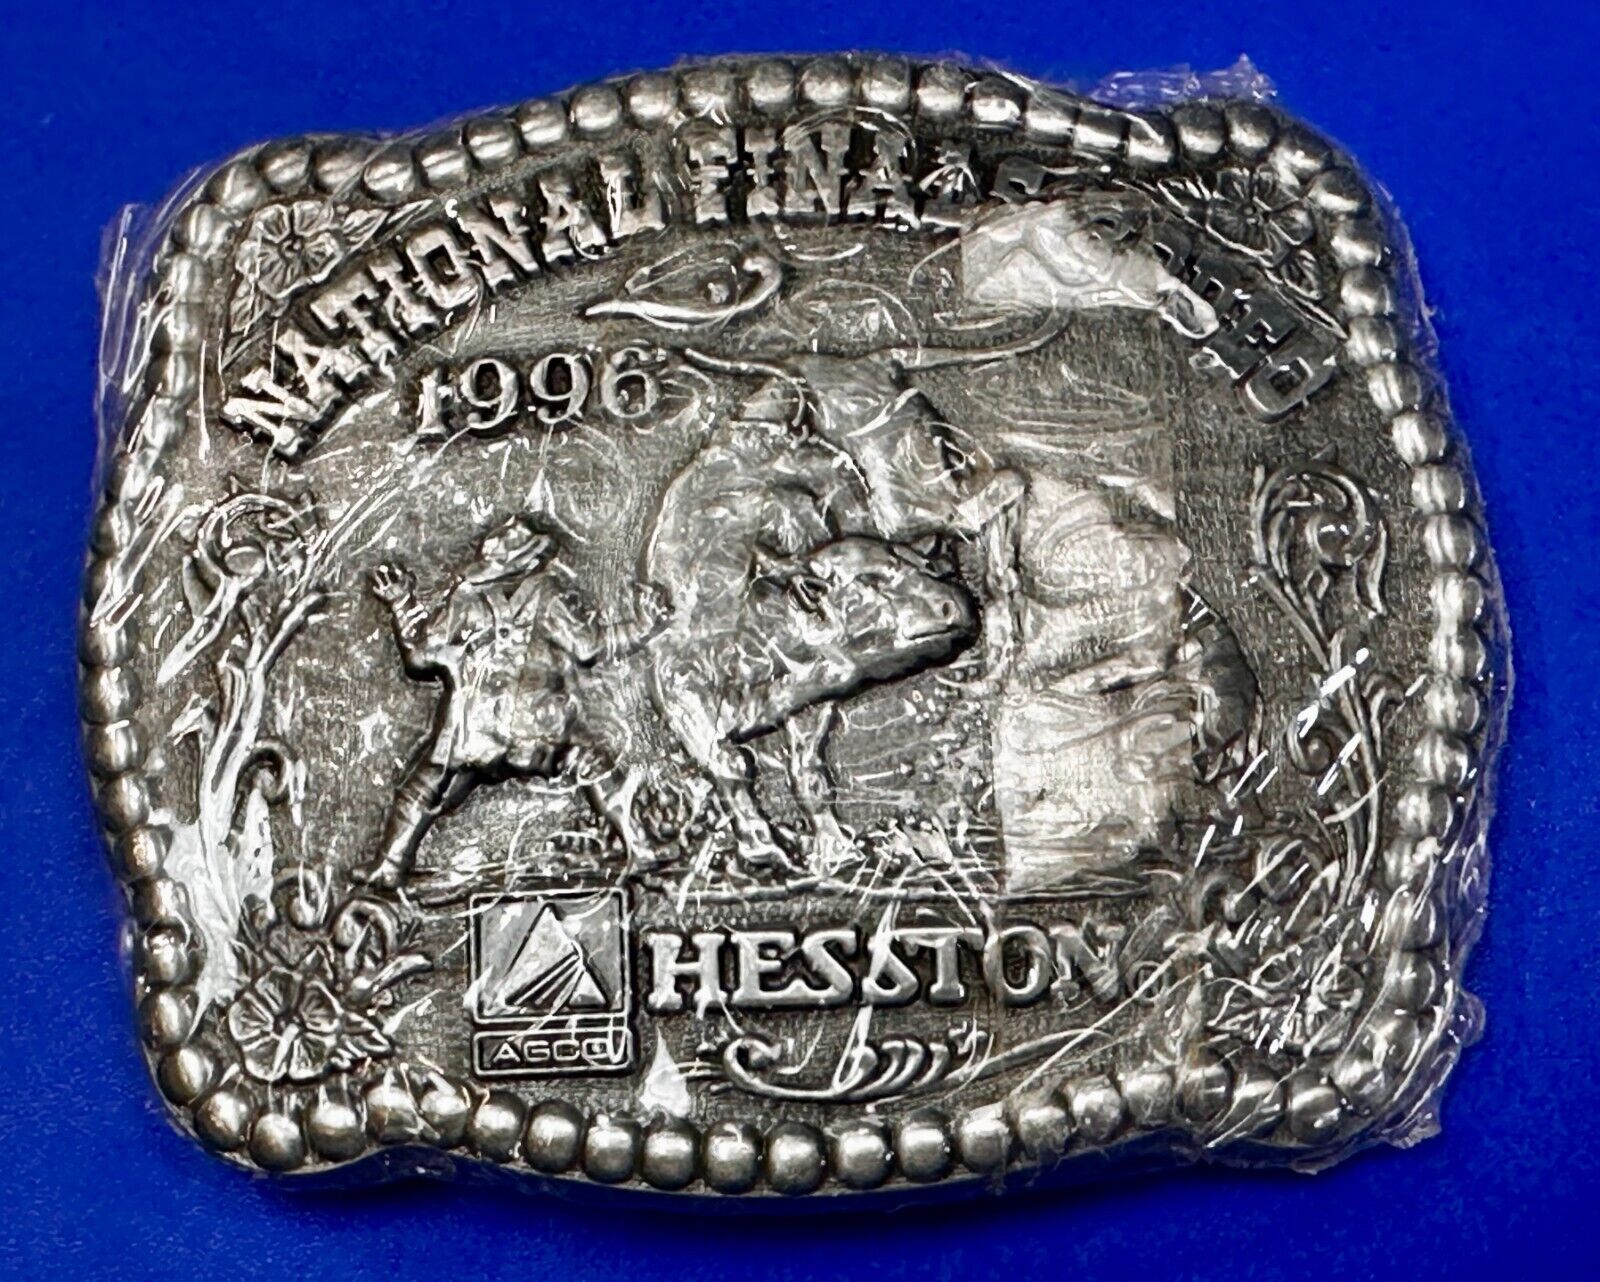 1996 Hesston NFR National Finals Rodeo Cowboys  NOS Western Belt Buckle